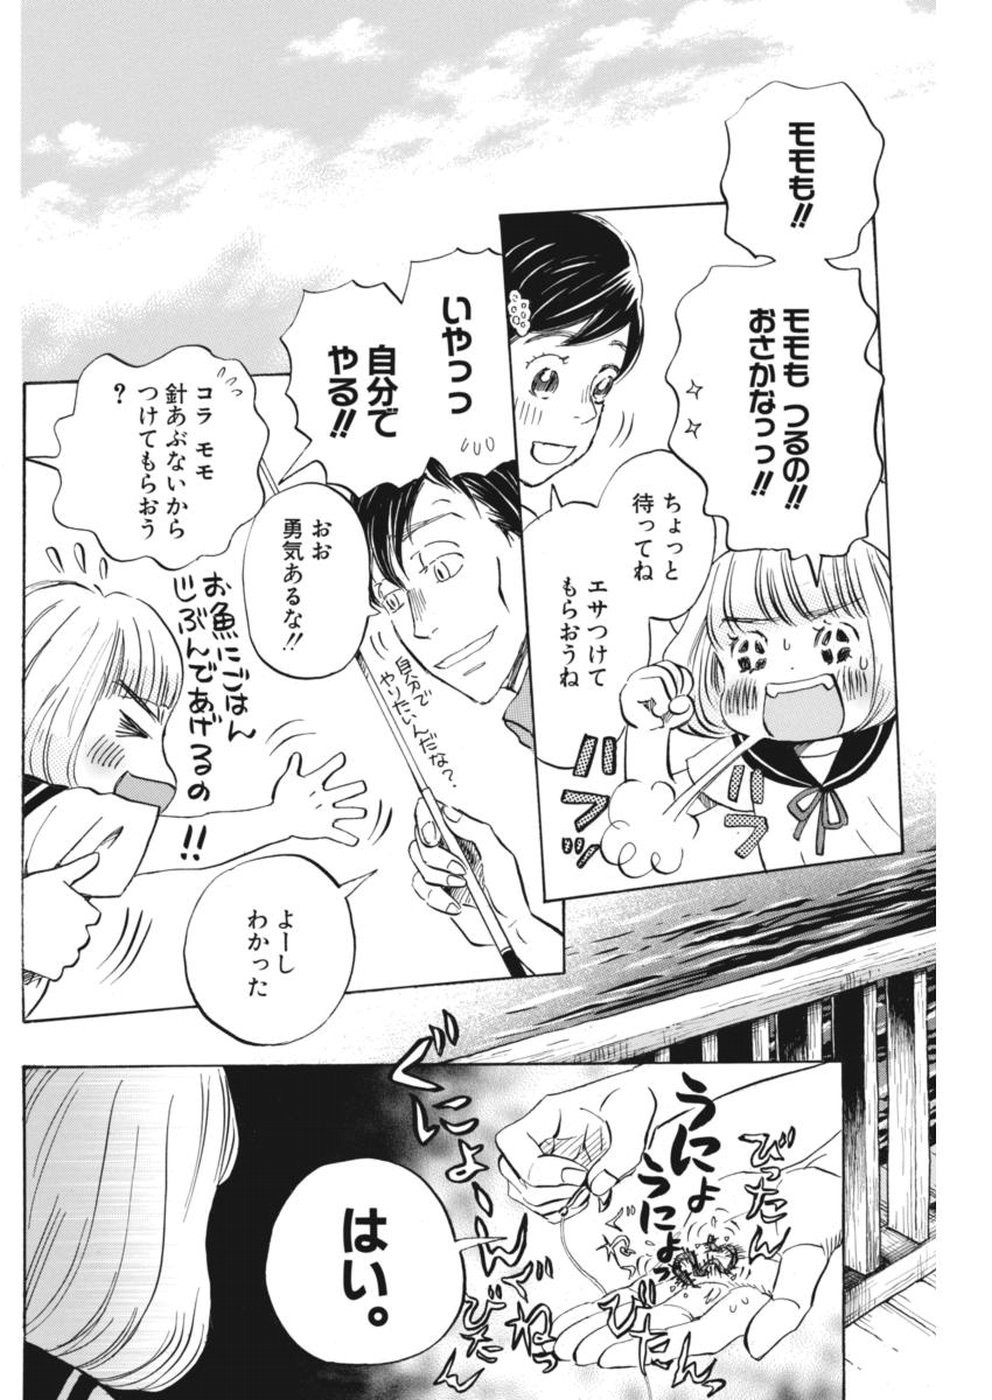 3 Gatsu no Lion - Chapter 144 - Page 2